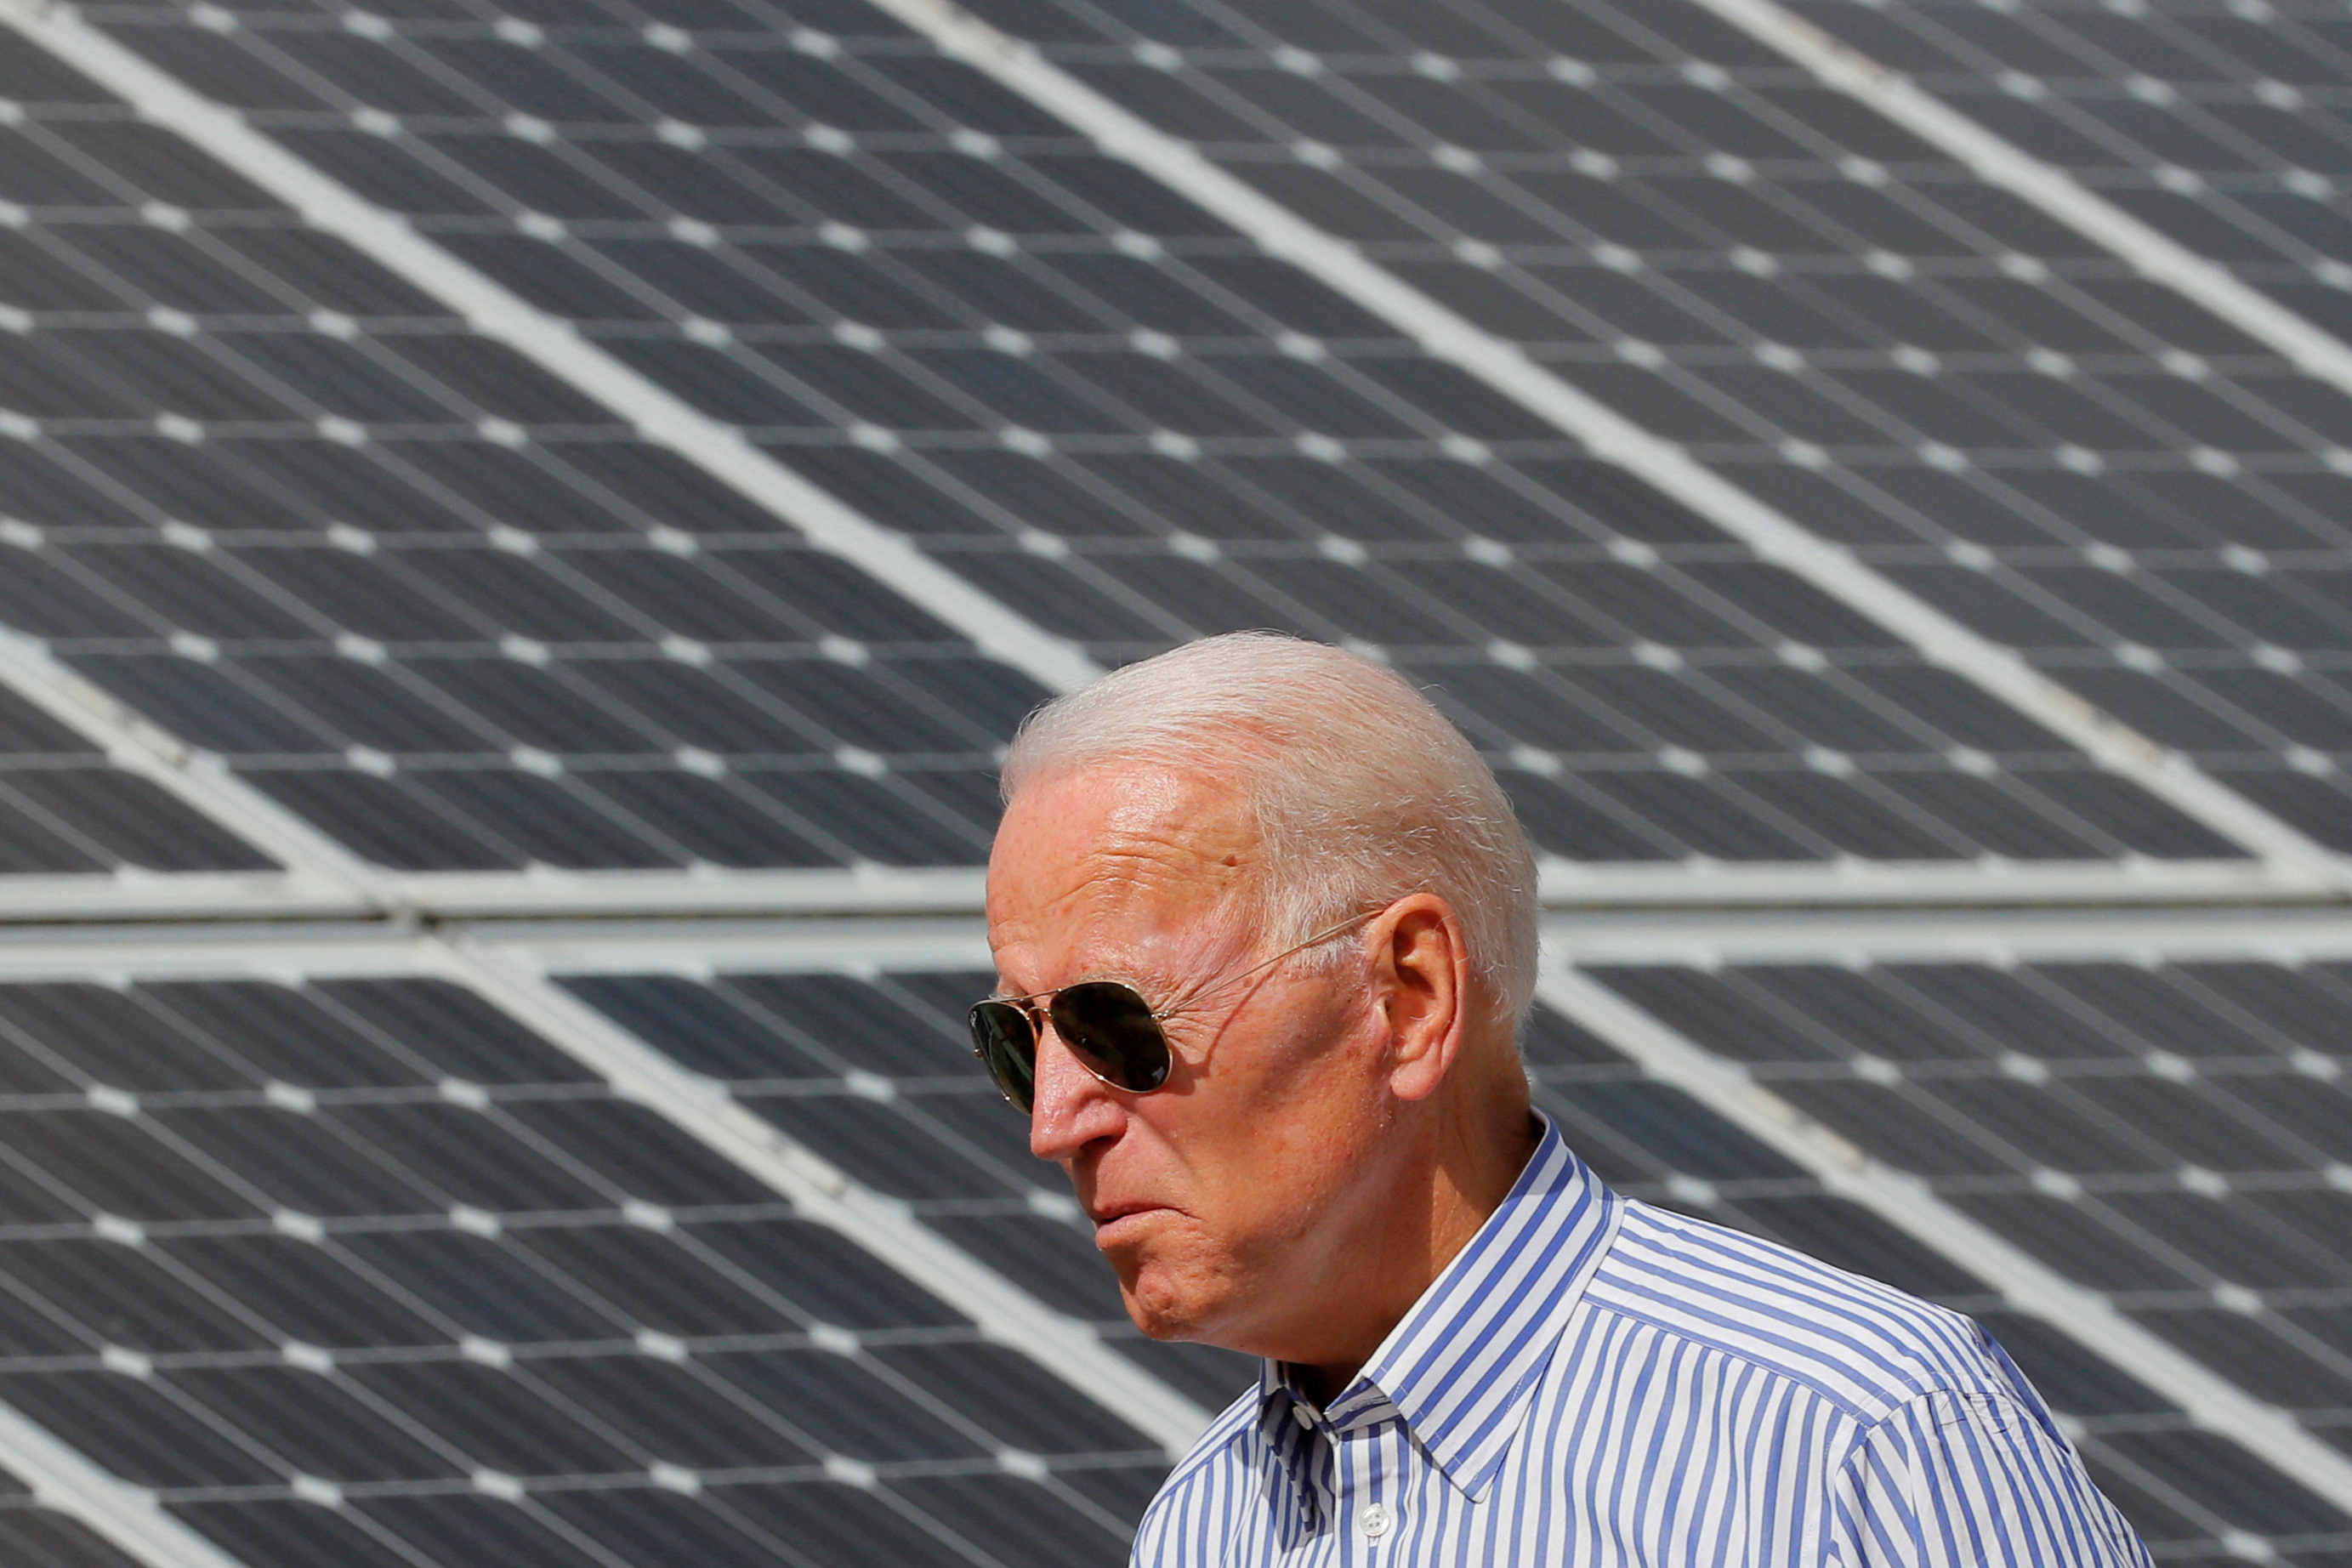 Democratic 2020 U.S. presidential candidate Biden walks past solar panels in Plymouth